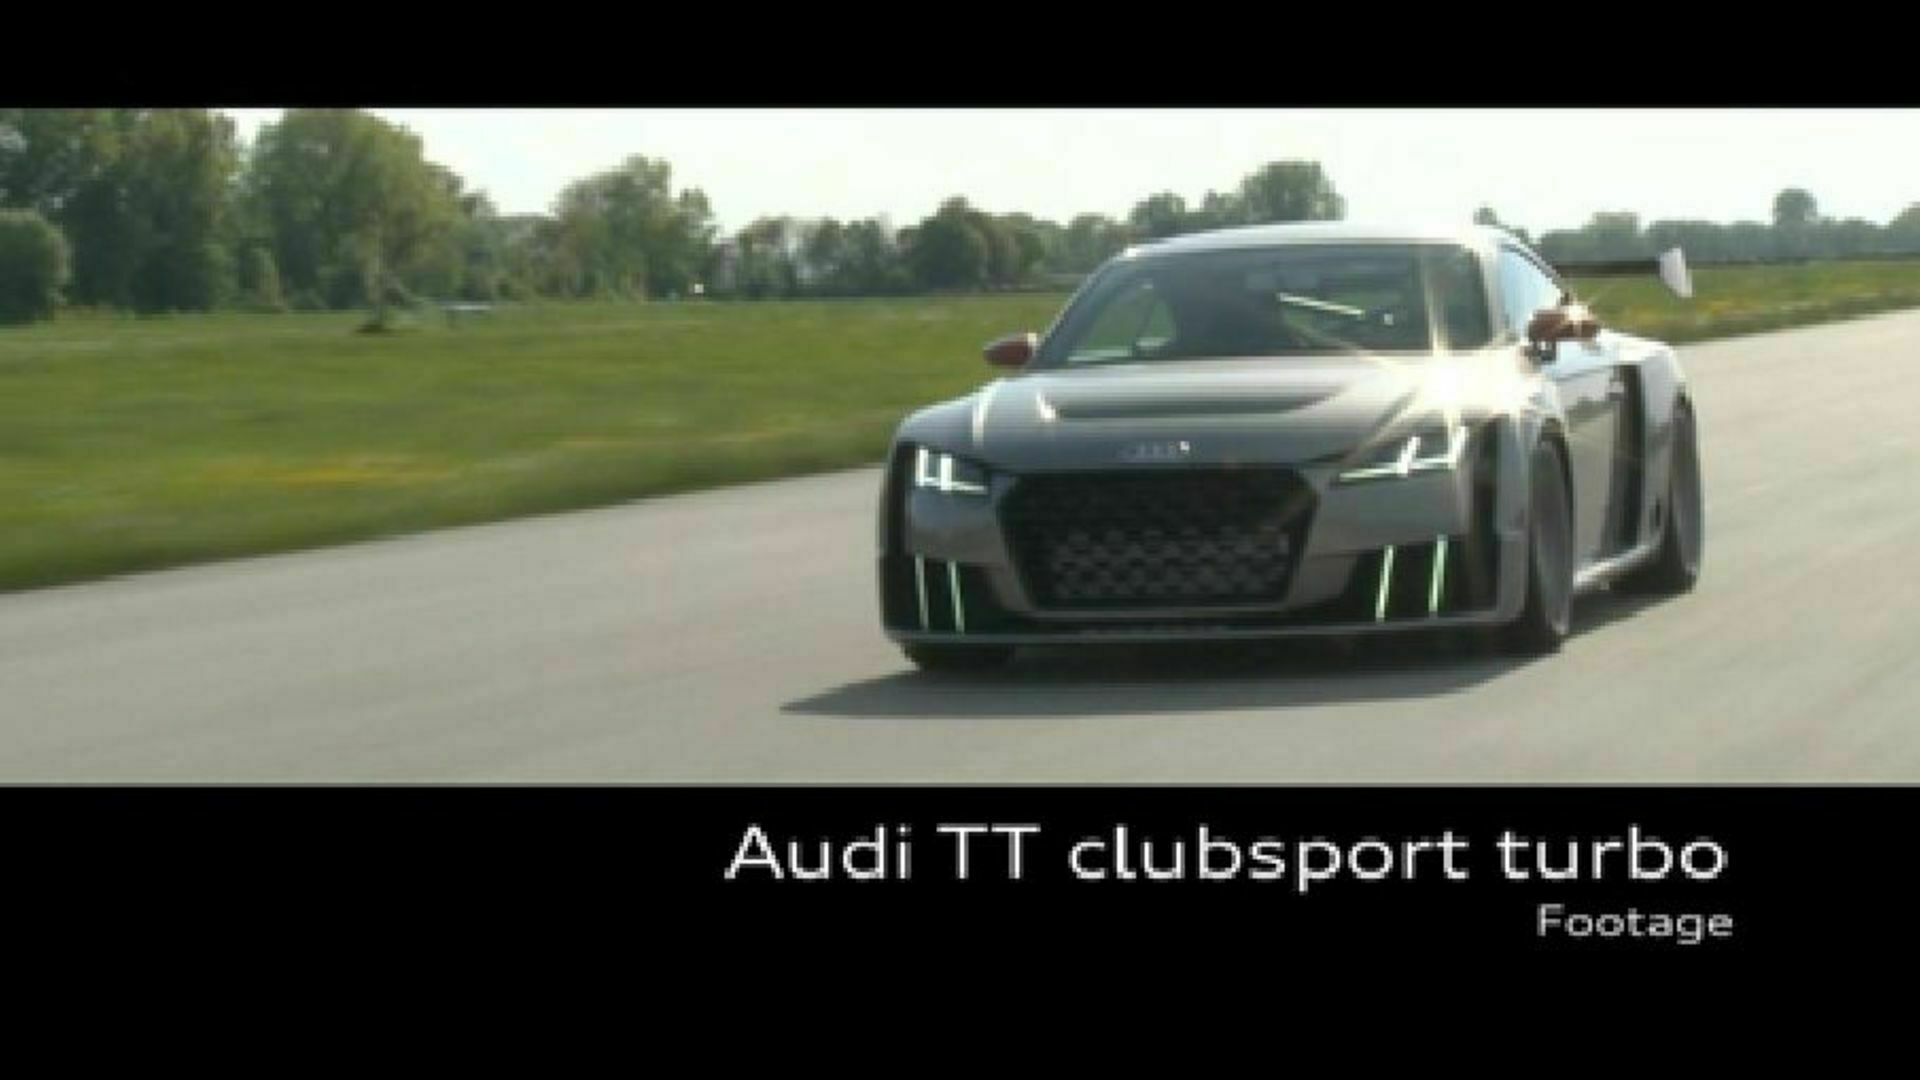 Audi TT clubsport turbo - Footage